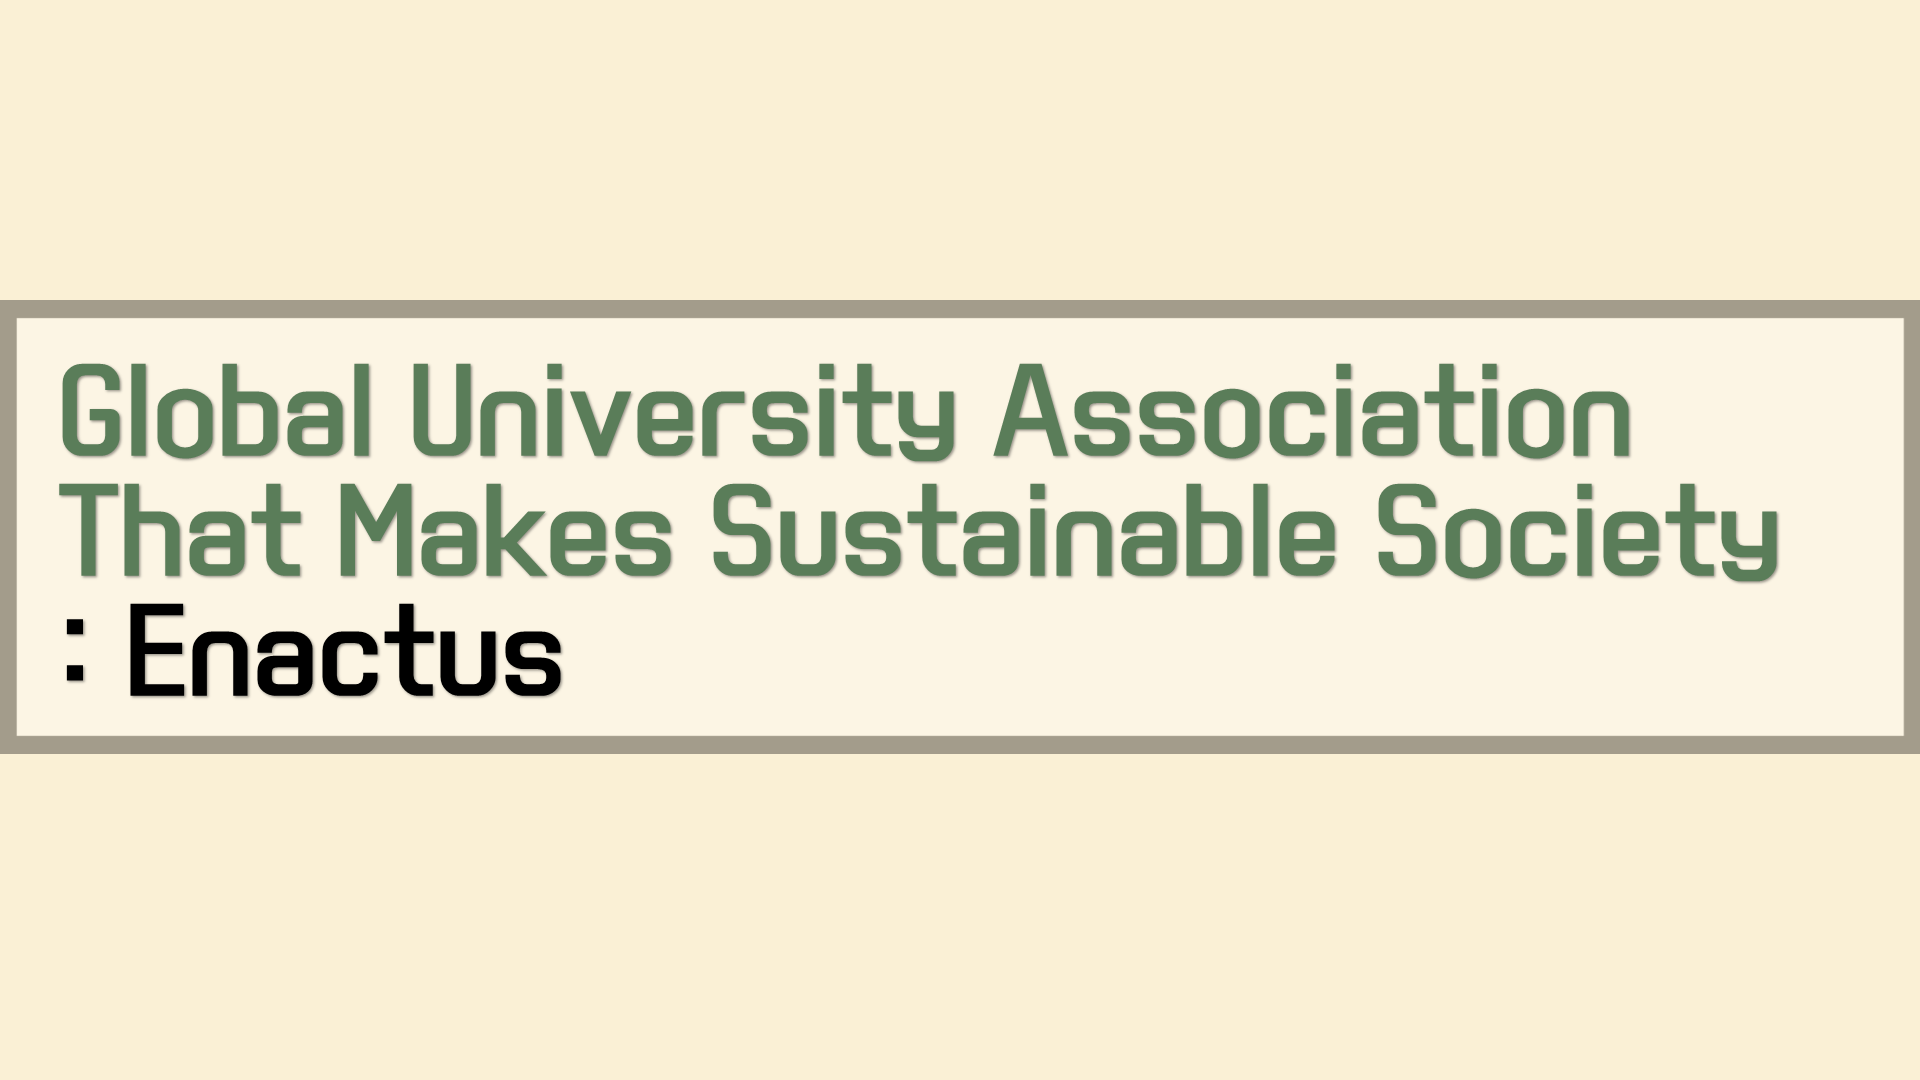 Global University Association that Makes Sustainable Society: Enactus